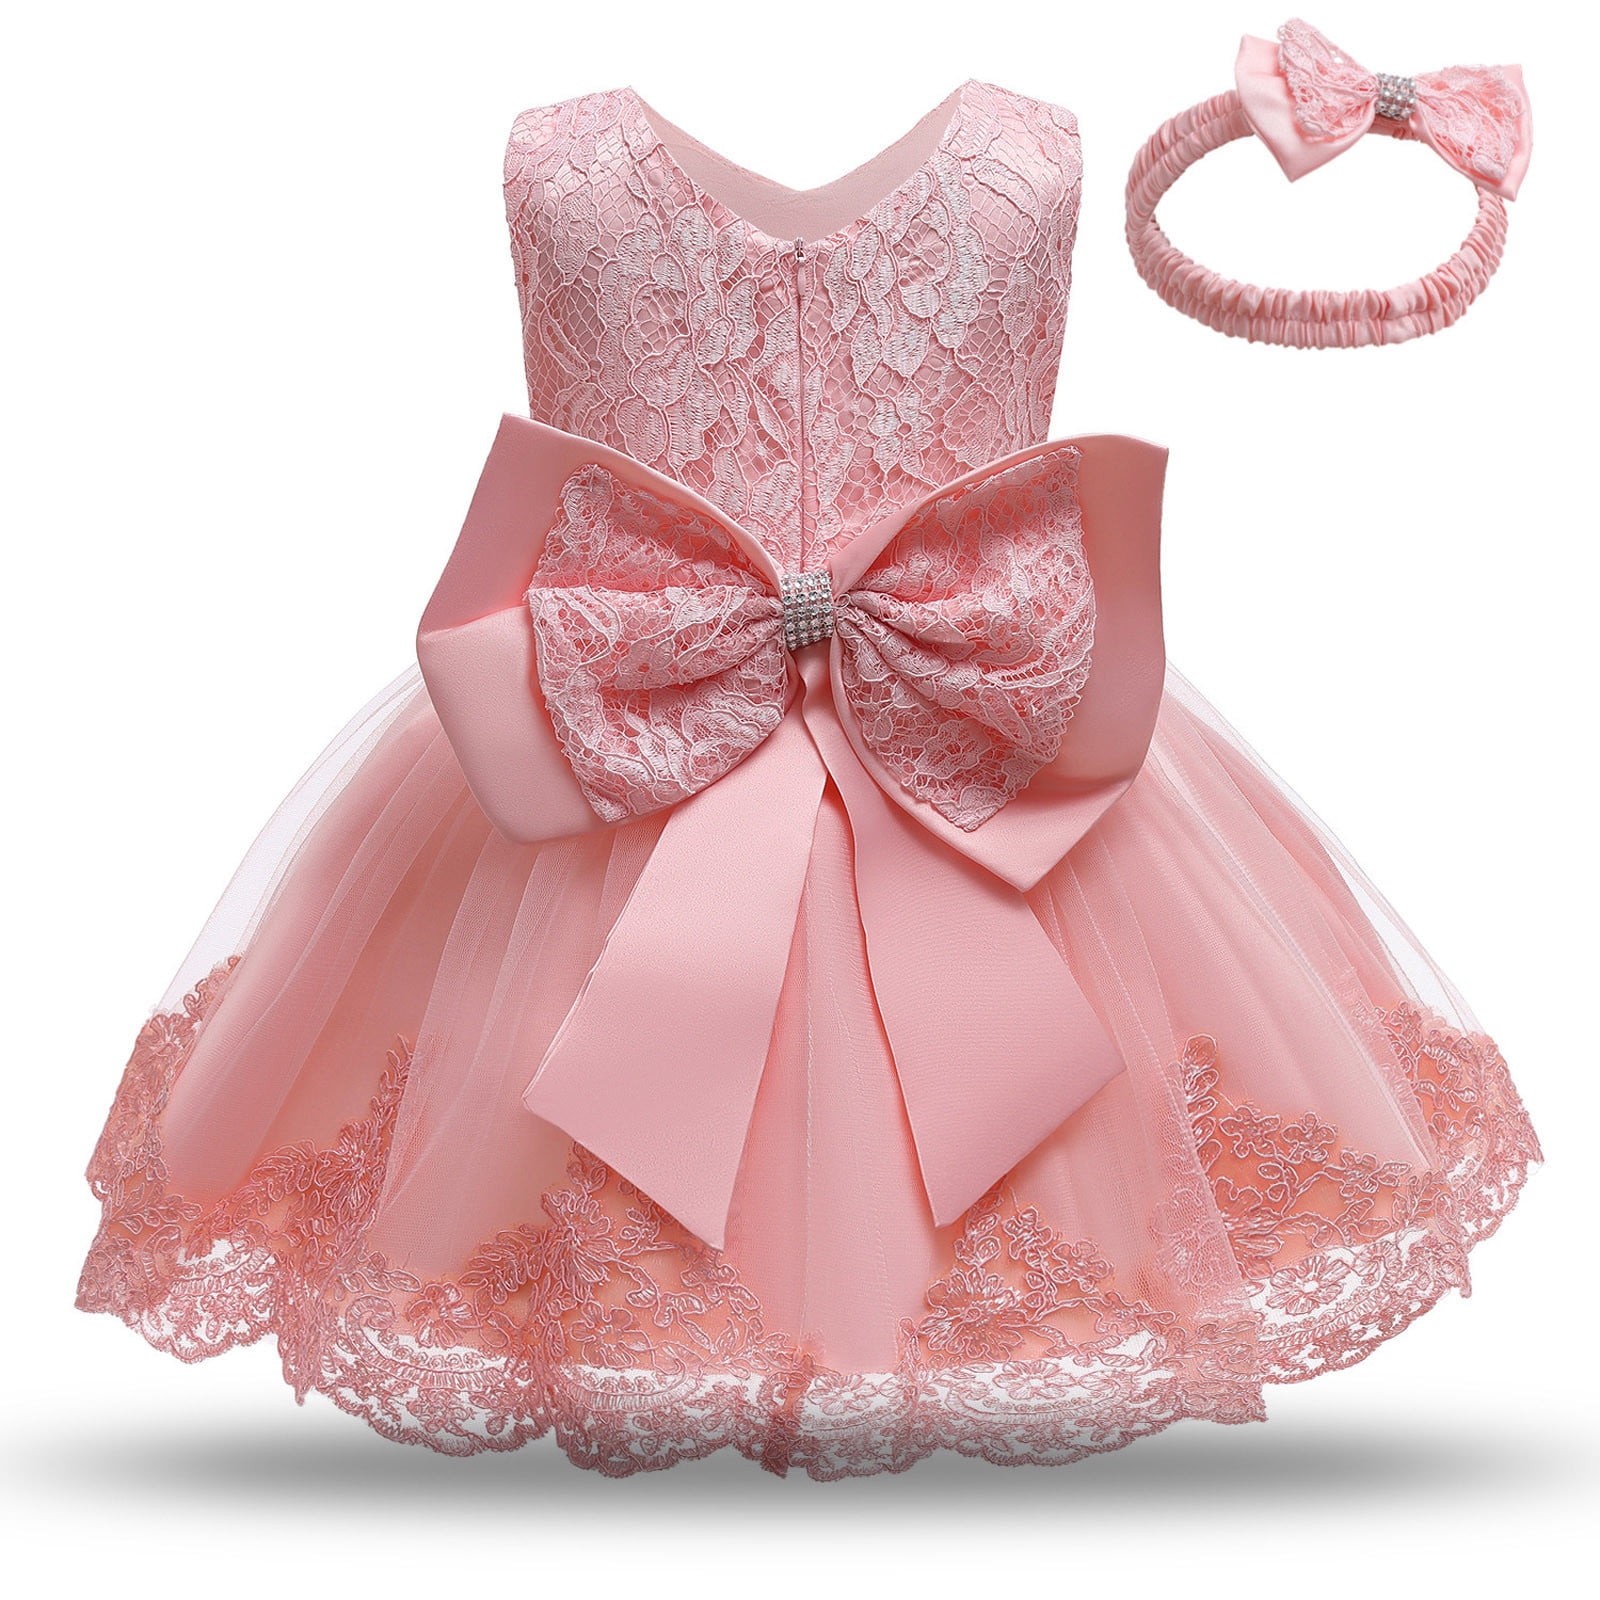 Girls Princess Dress Flower Girl Ruffle Wedding Party Frock Kids Ball Gown  – Inayah Fashion Boutique